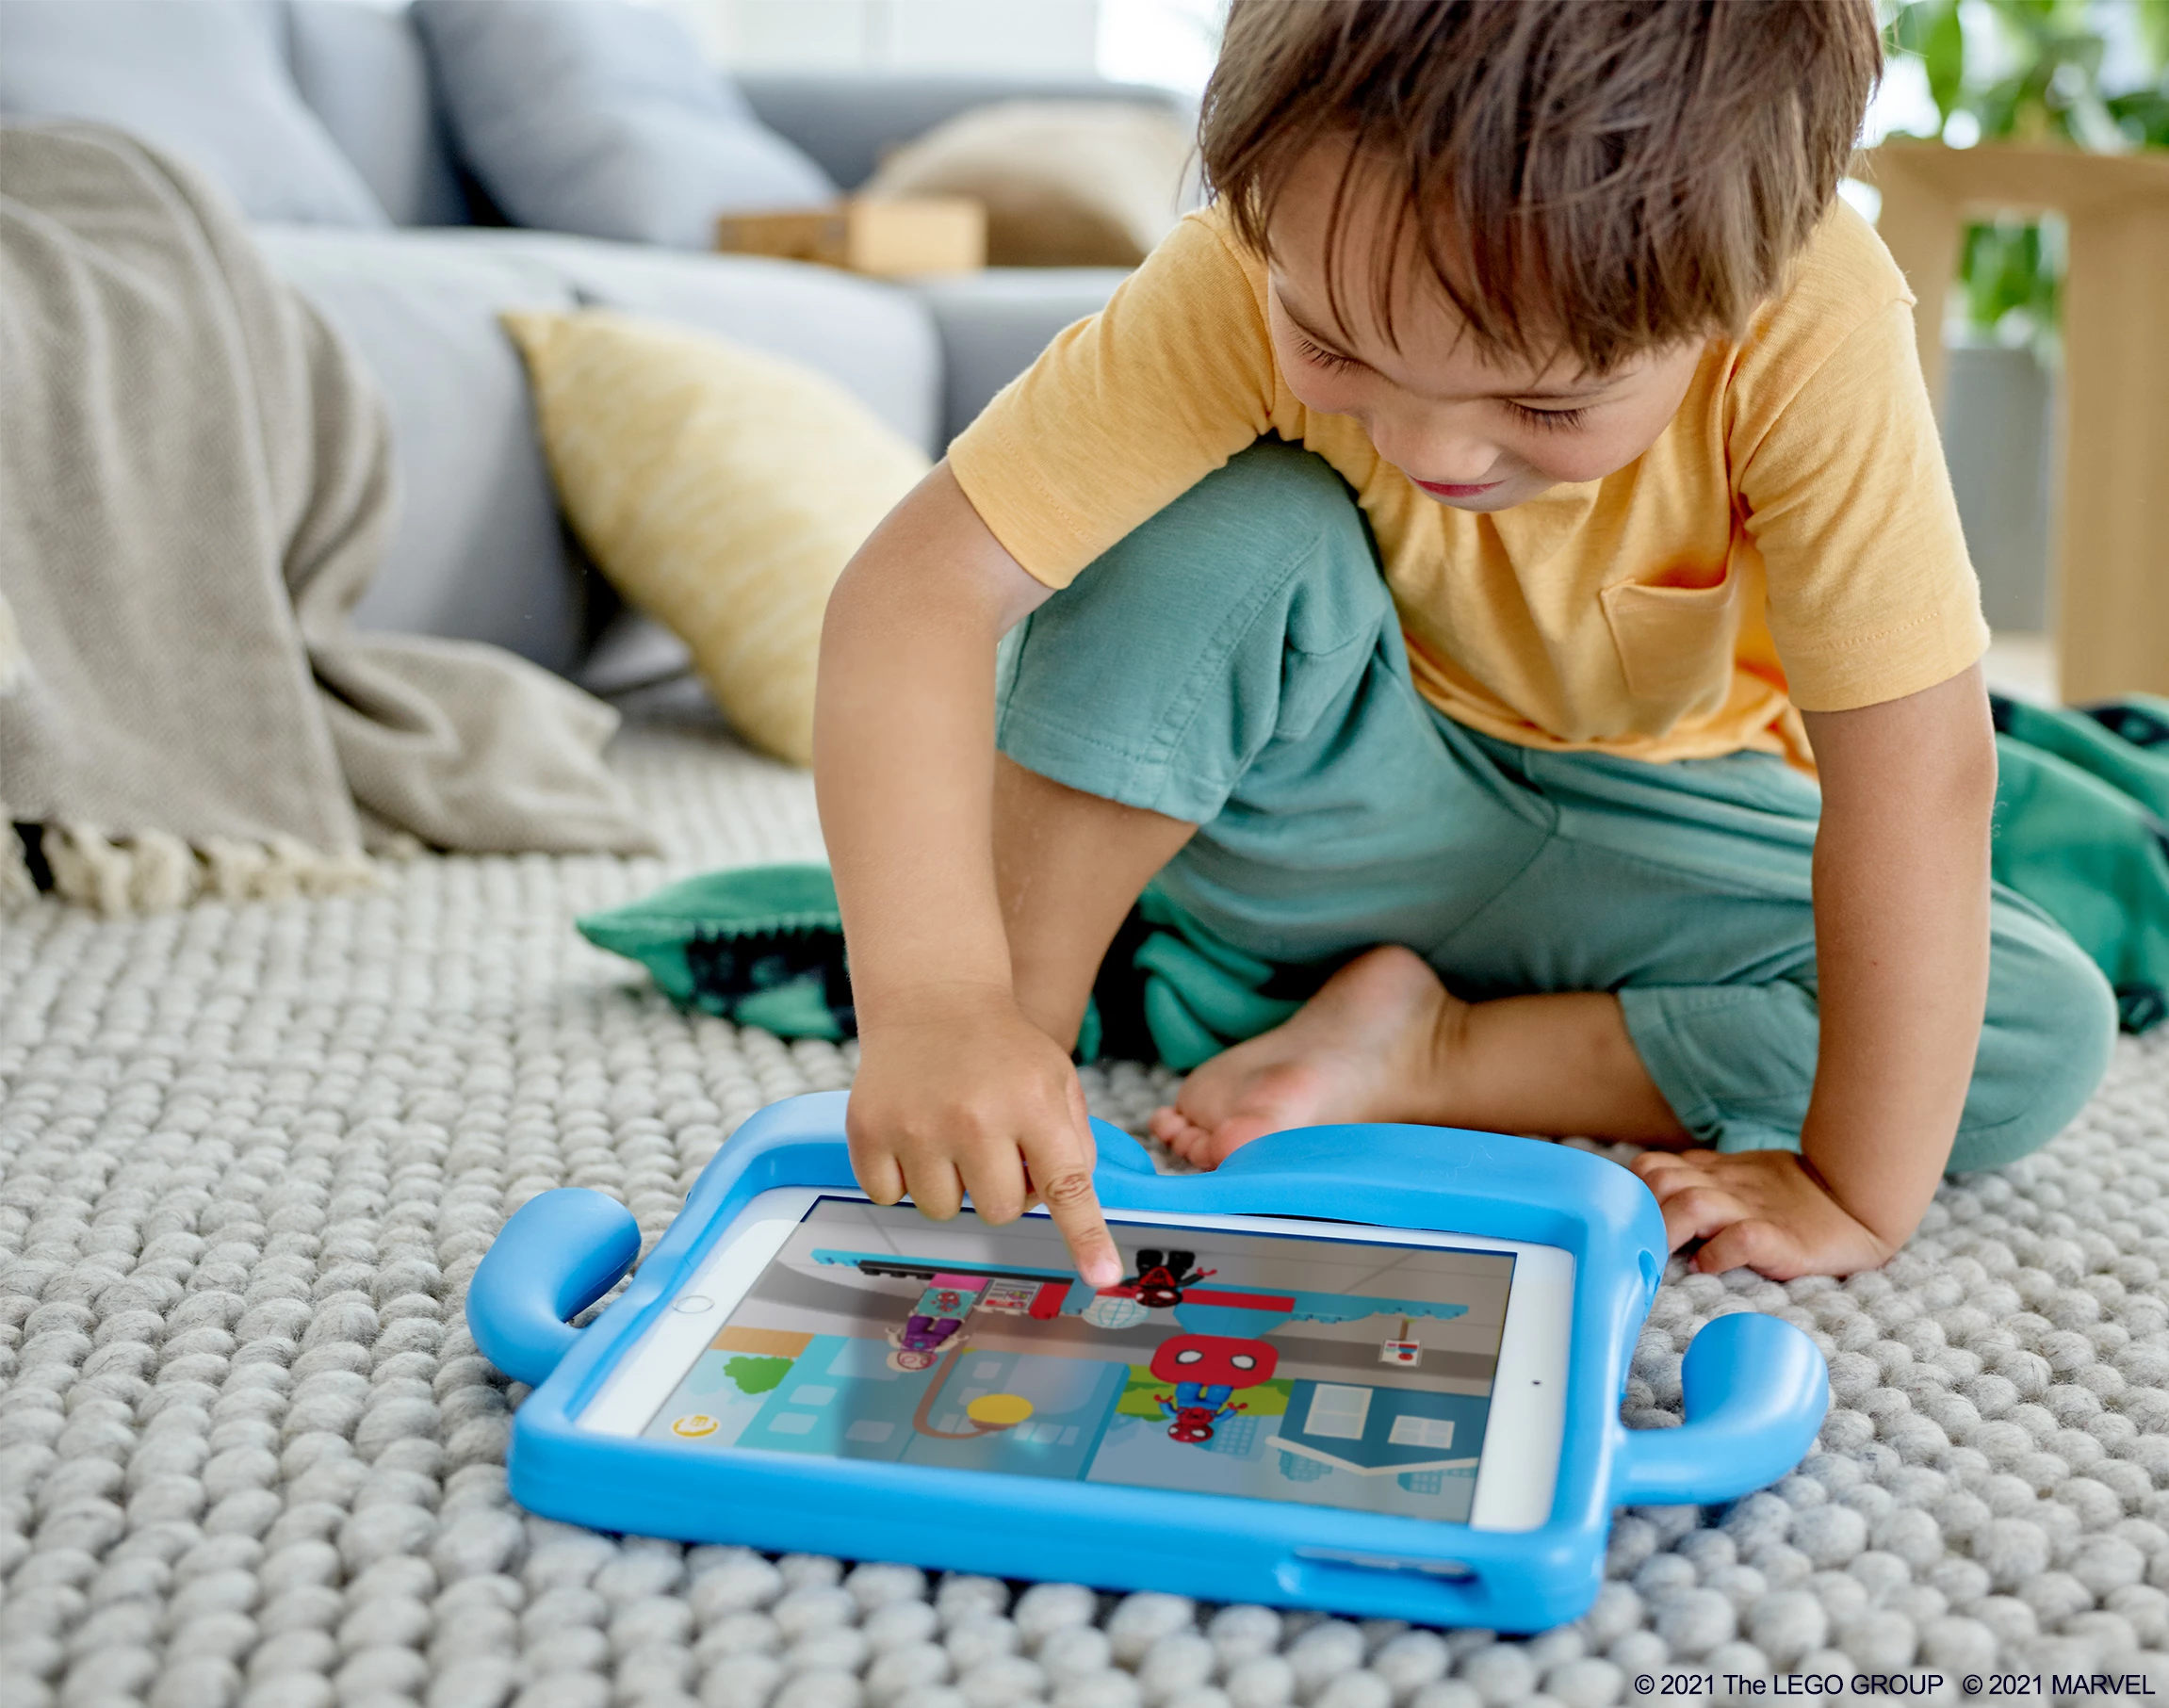 The LEGO DUPLO MARVEL app will be designed for children aged 2-5.